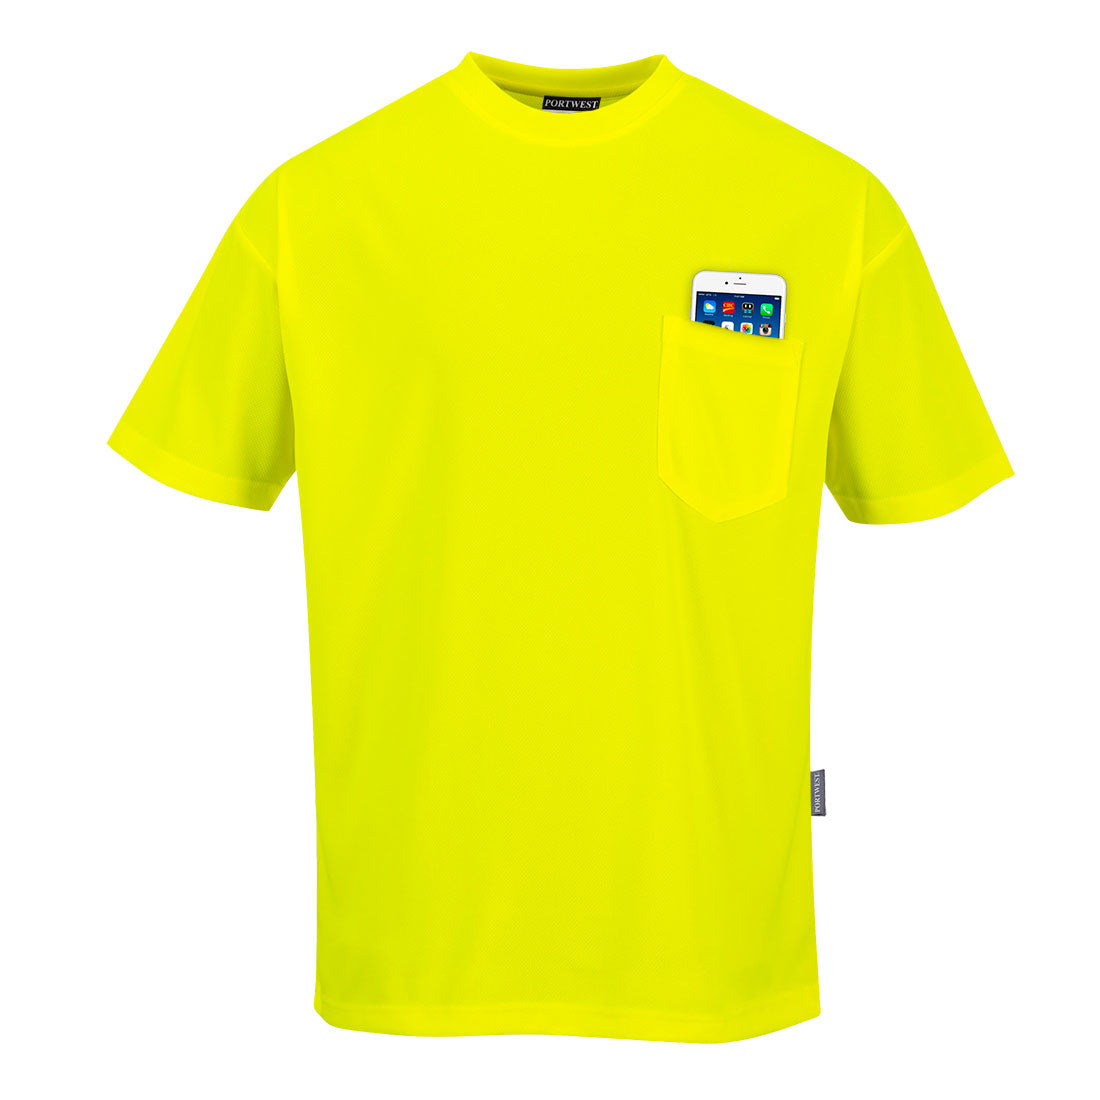 Portwest Short Sleeve Pocket T-Shirt S578 - New England Safety Supply